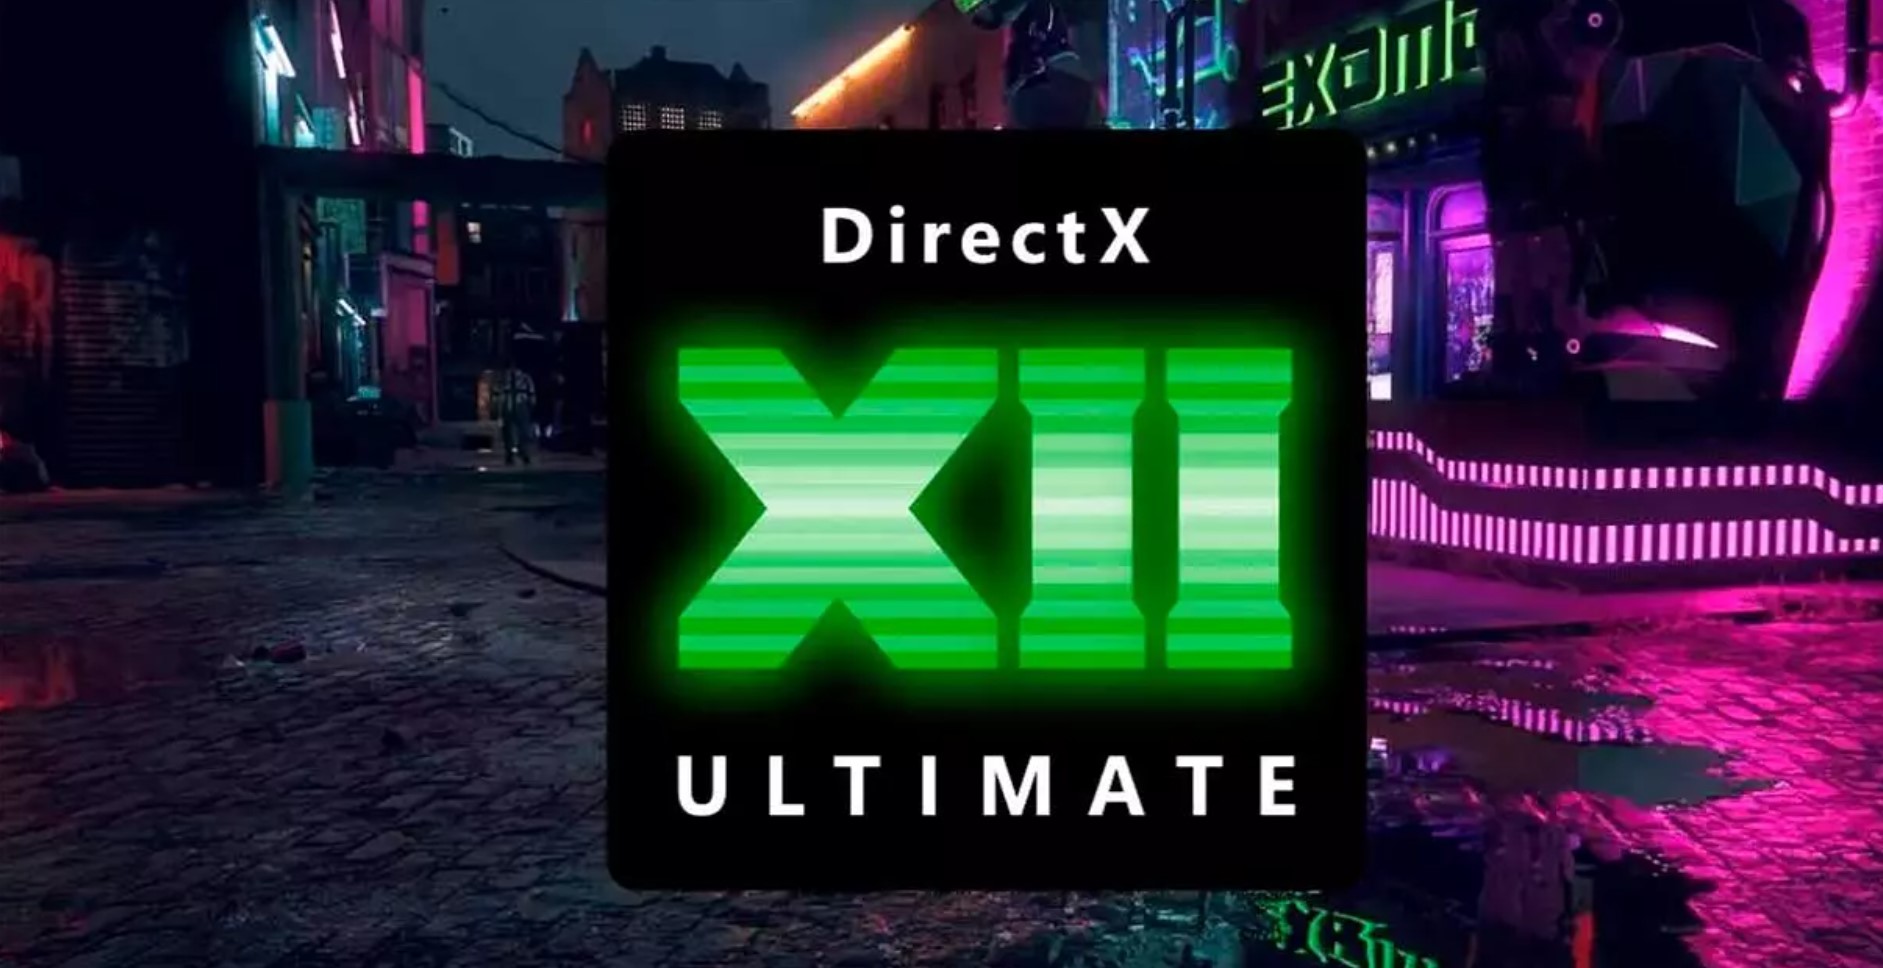 Introducing DIRECTX 12 ULTIMATE